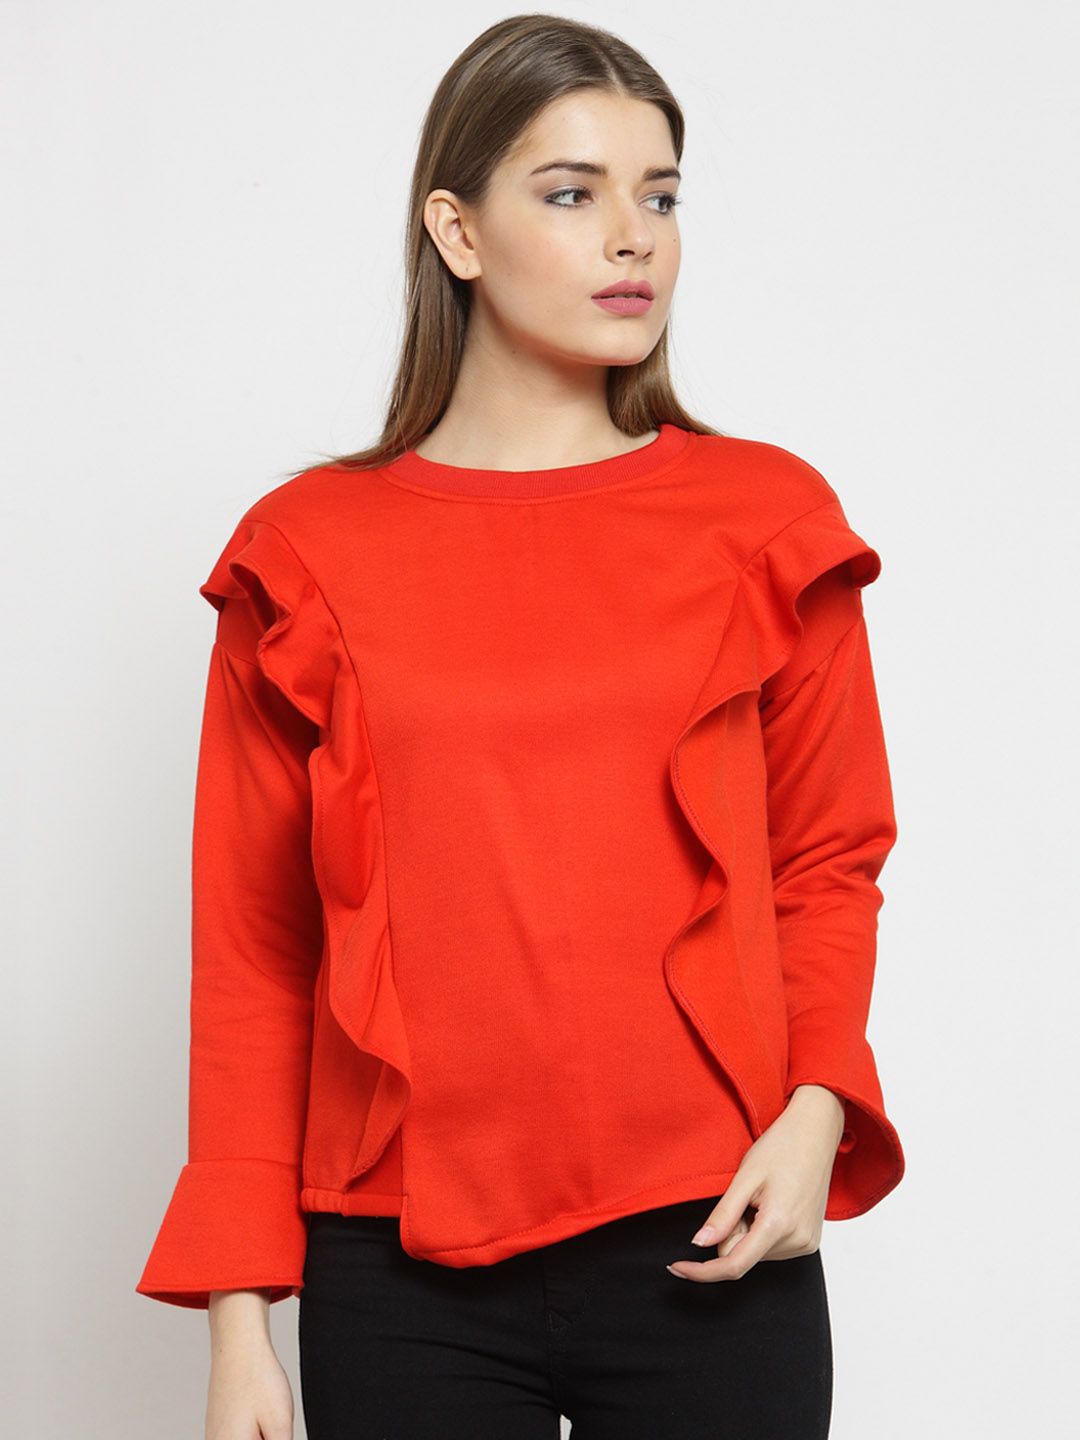 Belle Fille Women Red Solid Sweatshirt Price in India